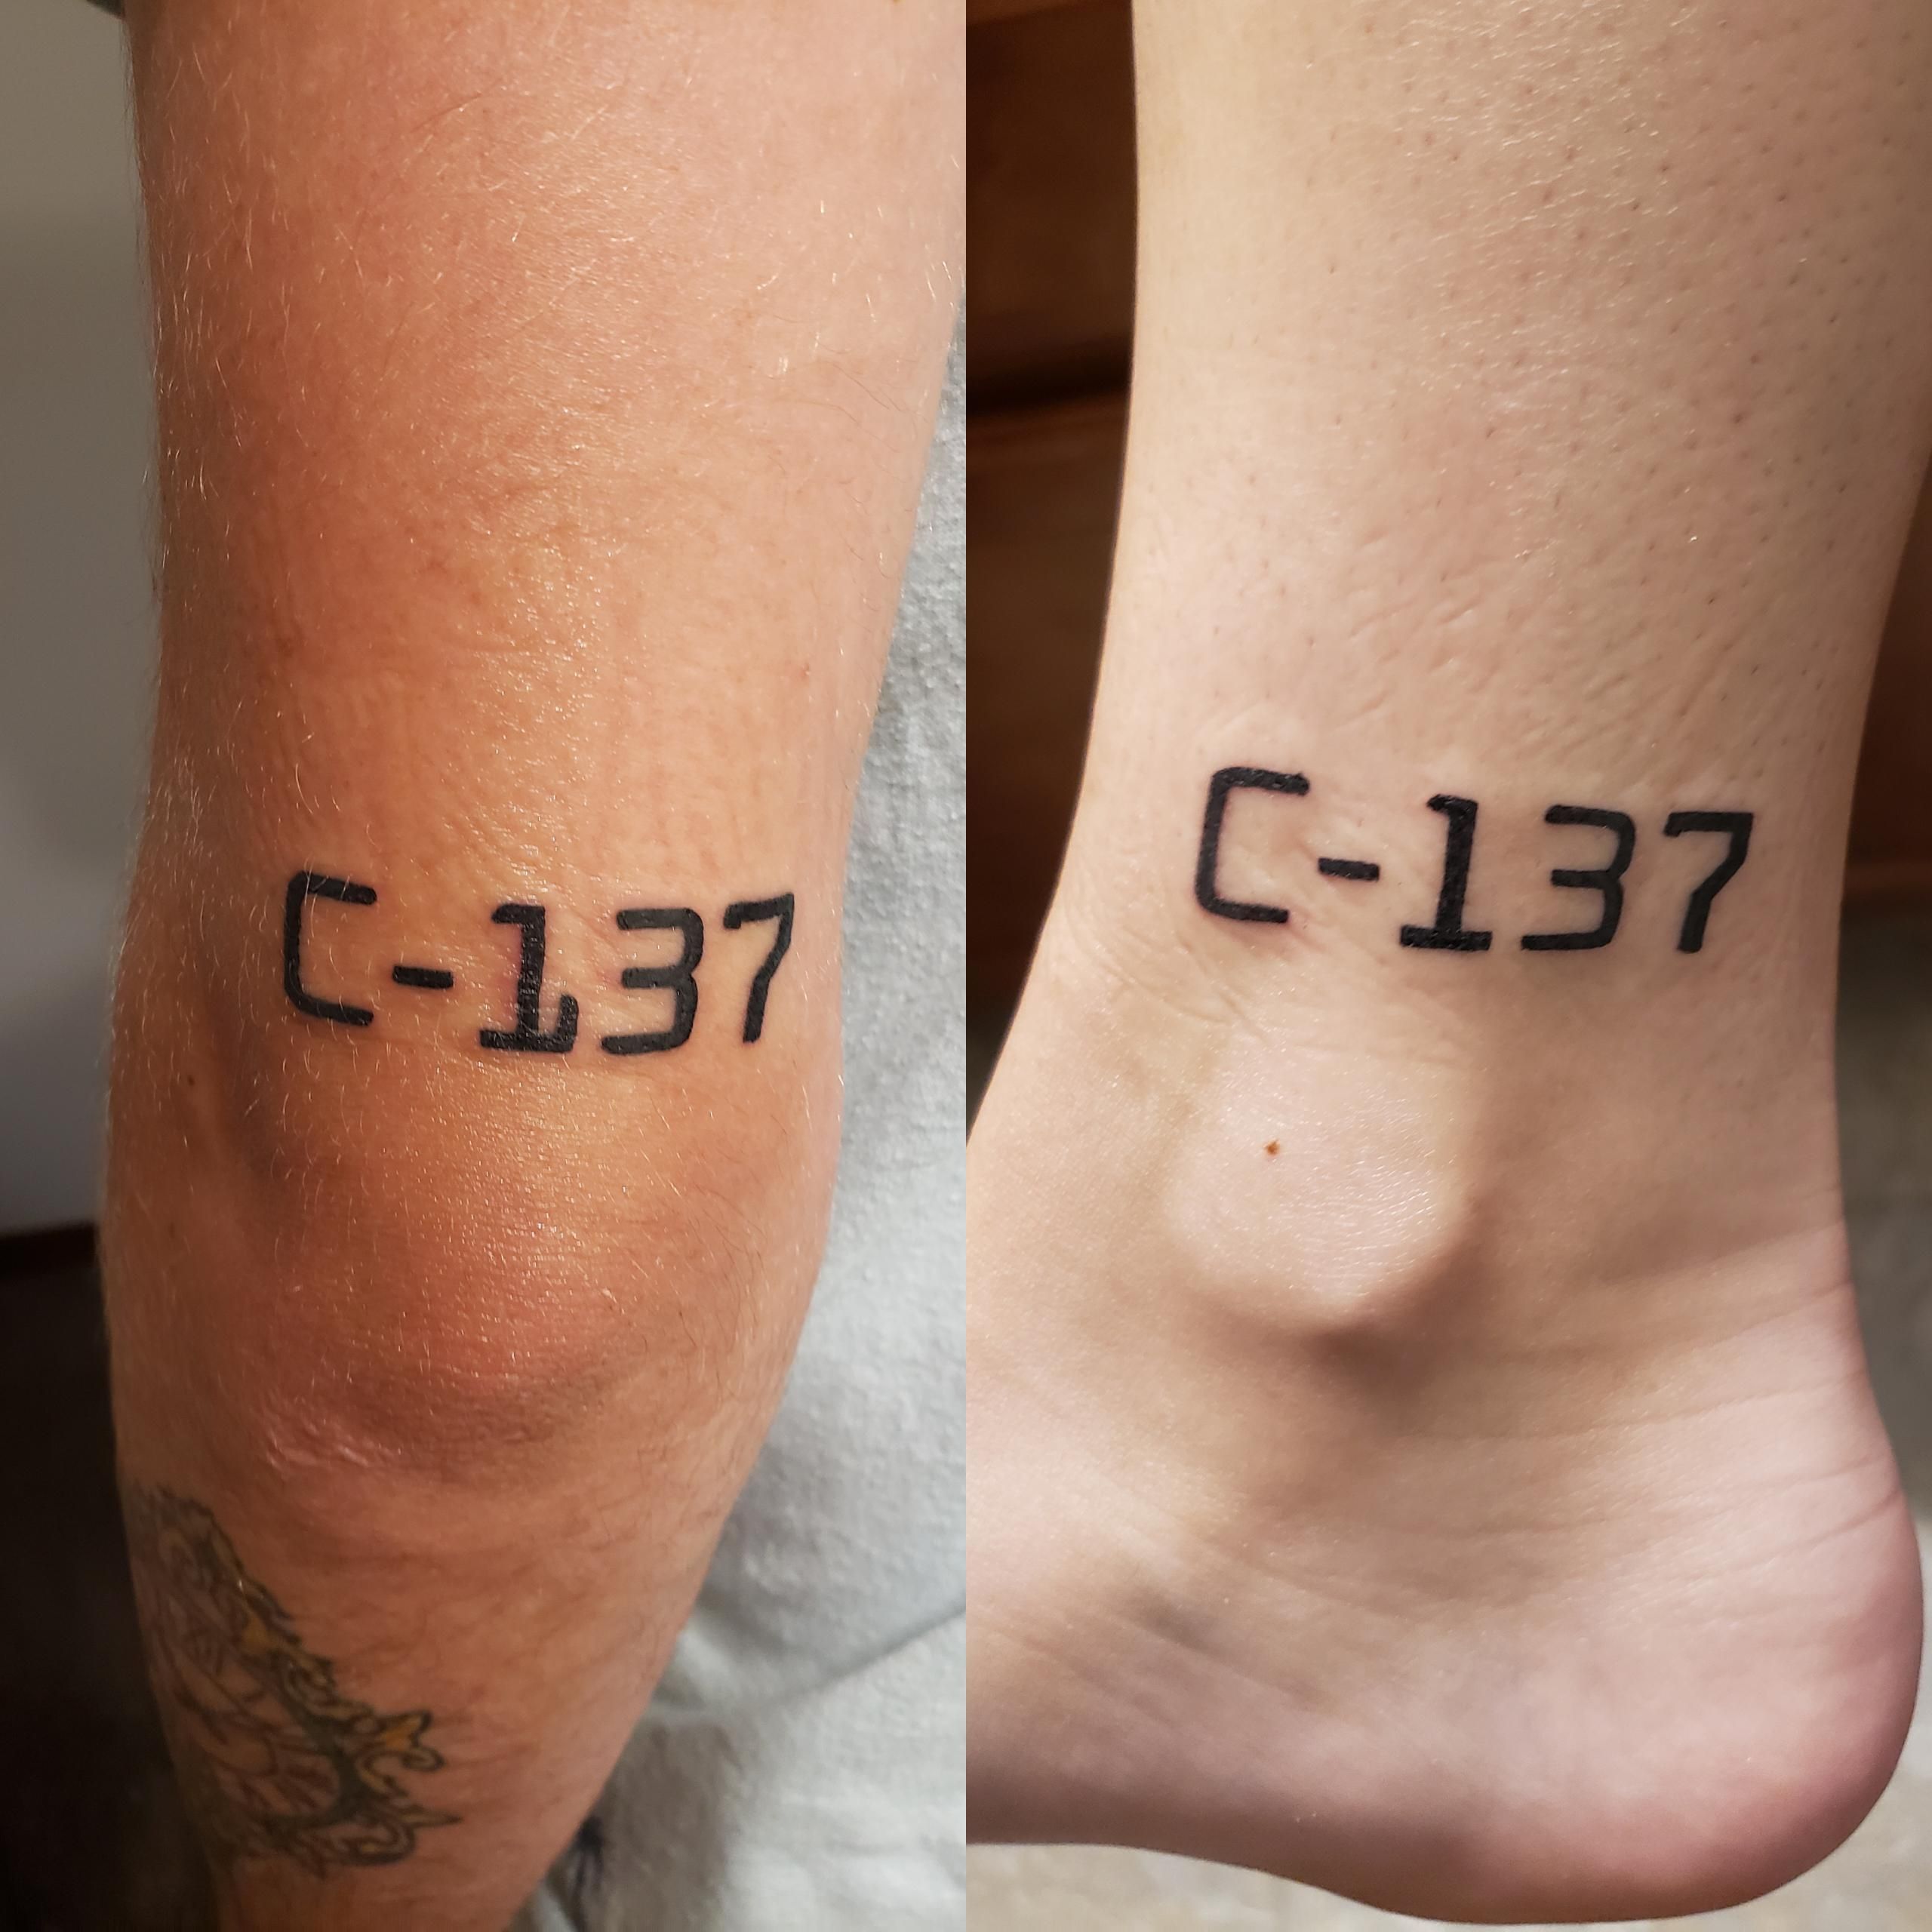 BF and I got C-137 tattoos ready for season 4! #rickandmorty #rick #picklerick #morty…